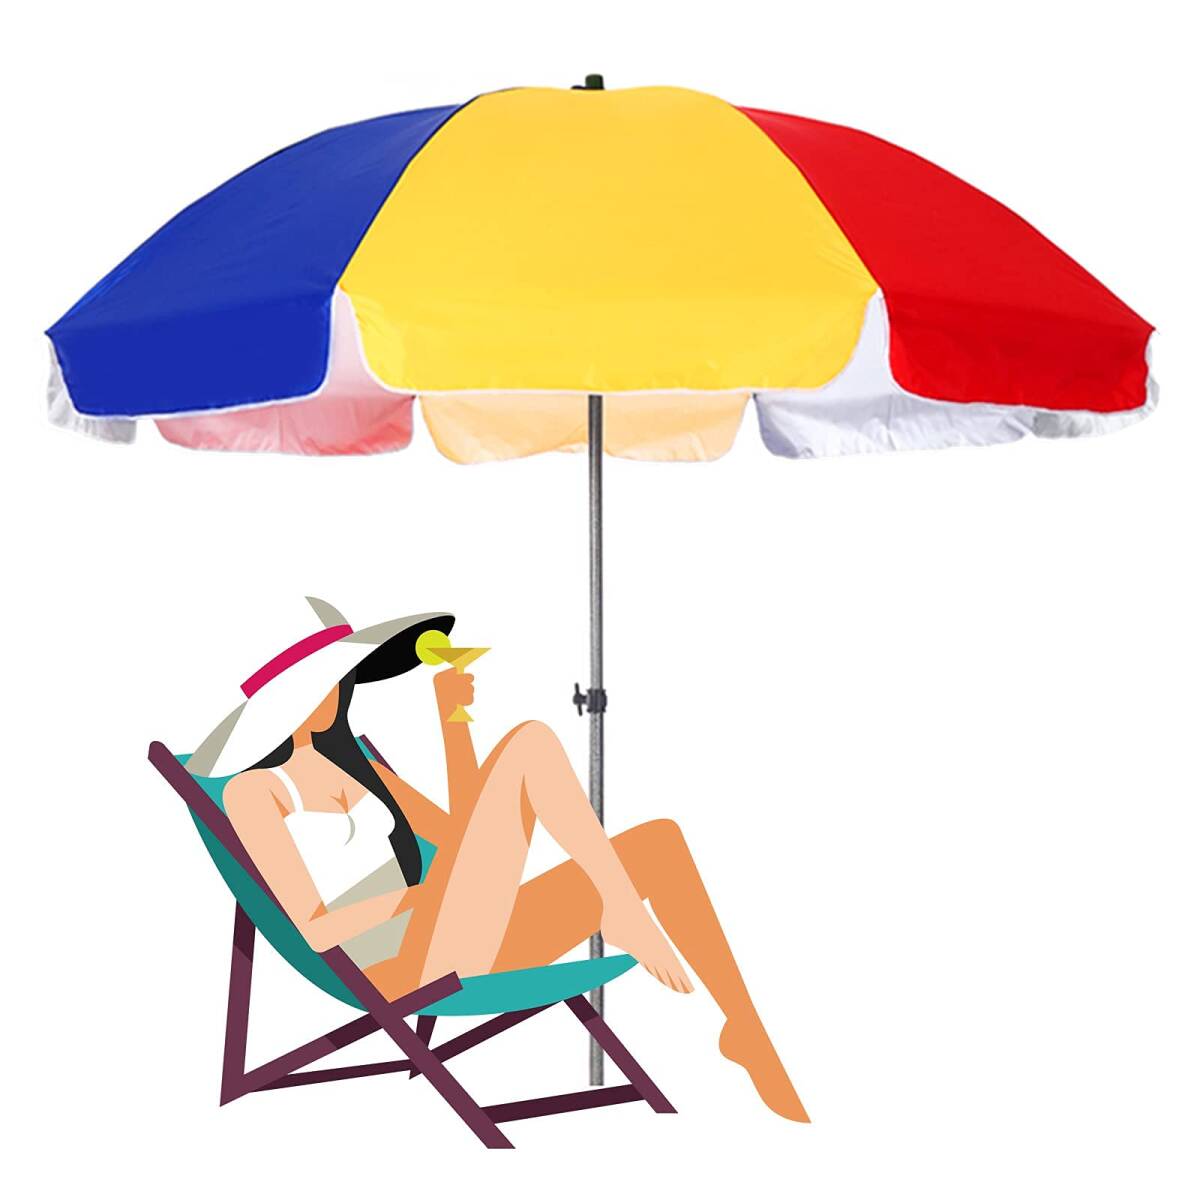 Large Garden Umbrella, Patio Market Table Umbrellas, Round Colored Sun Umbrella, Waterproof Oxford Cloth, with Strong Ribs, For_画像1